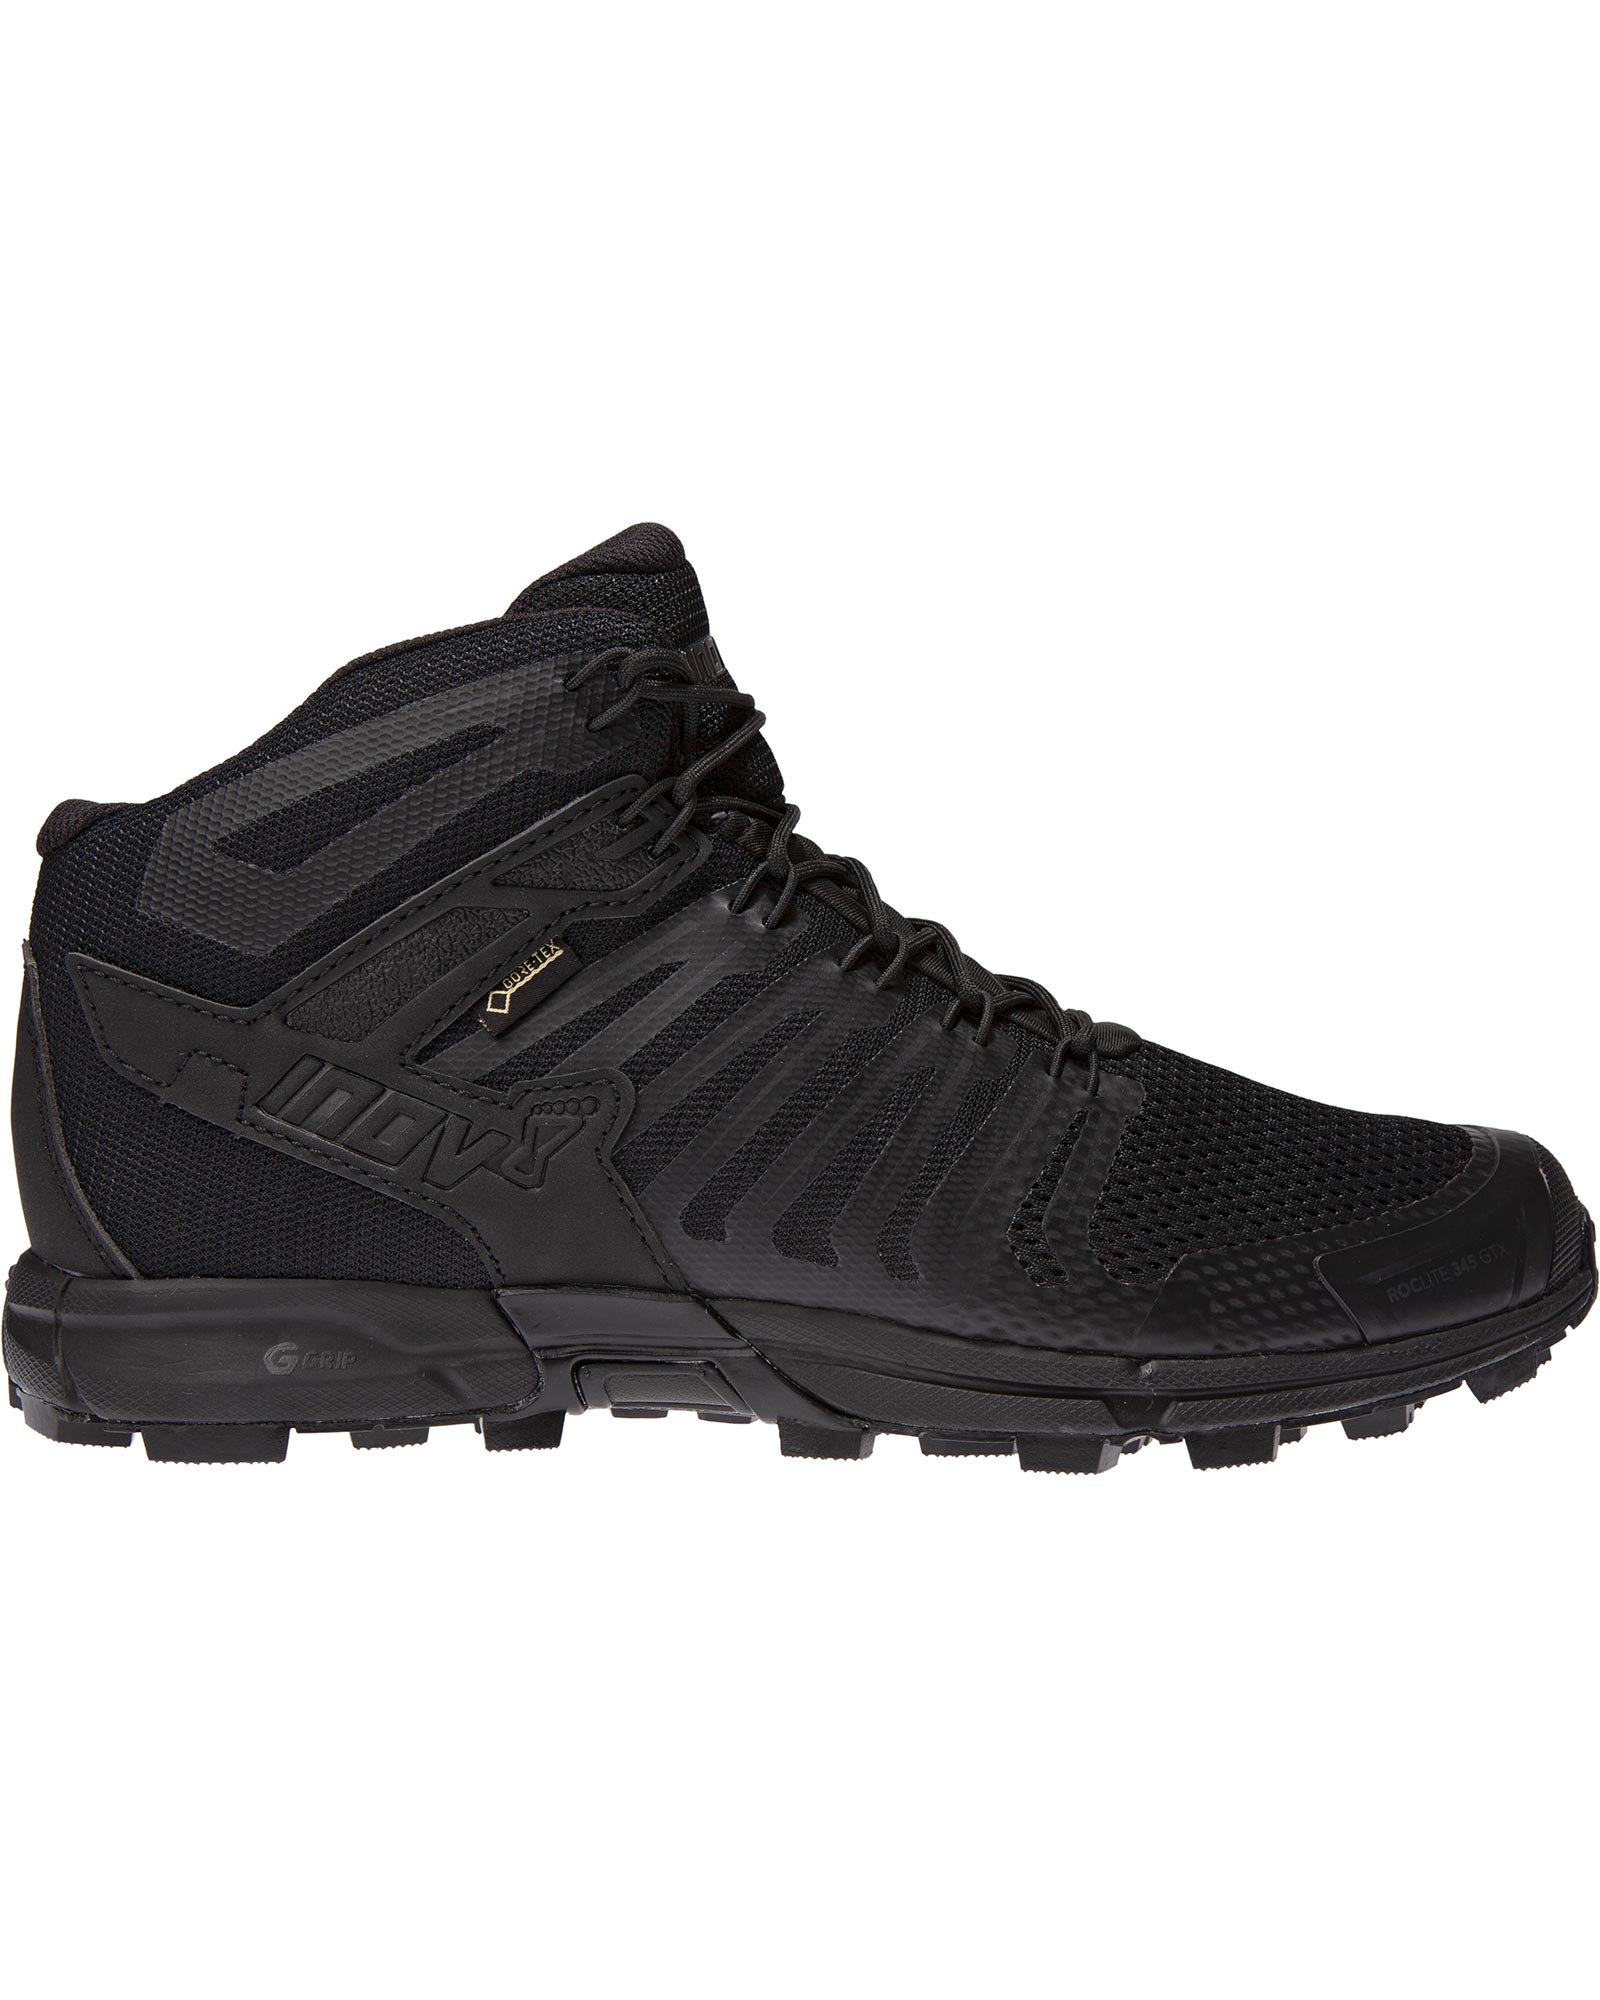 Inov 8 Roclite G 345 Mid GORE TEX Men’s Boots - black UK 11.5